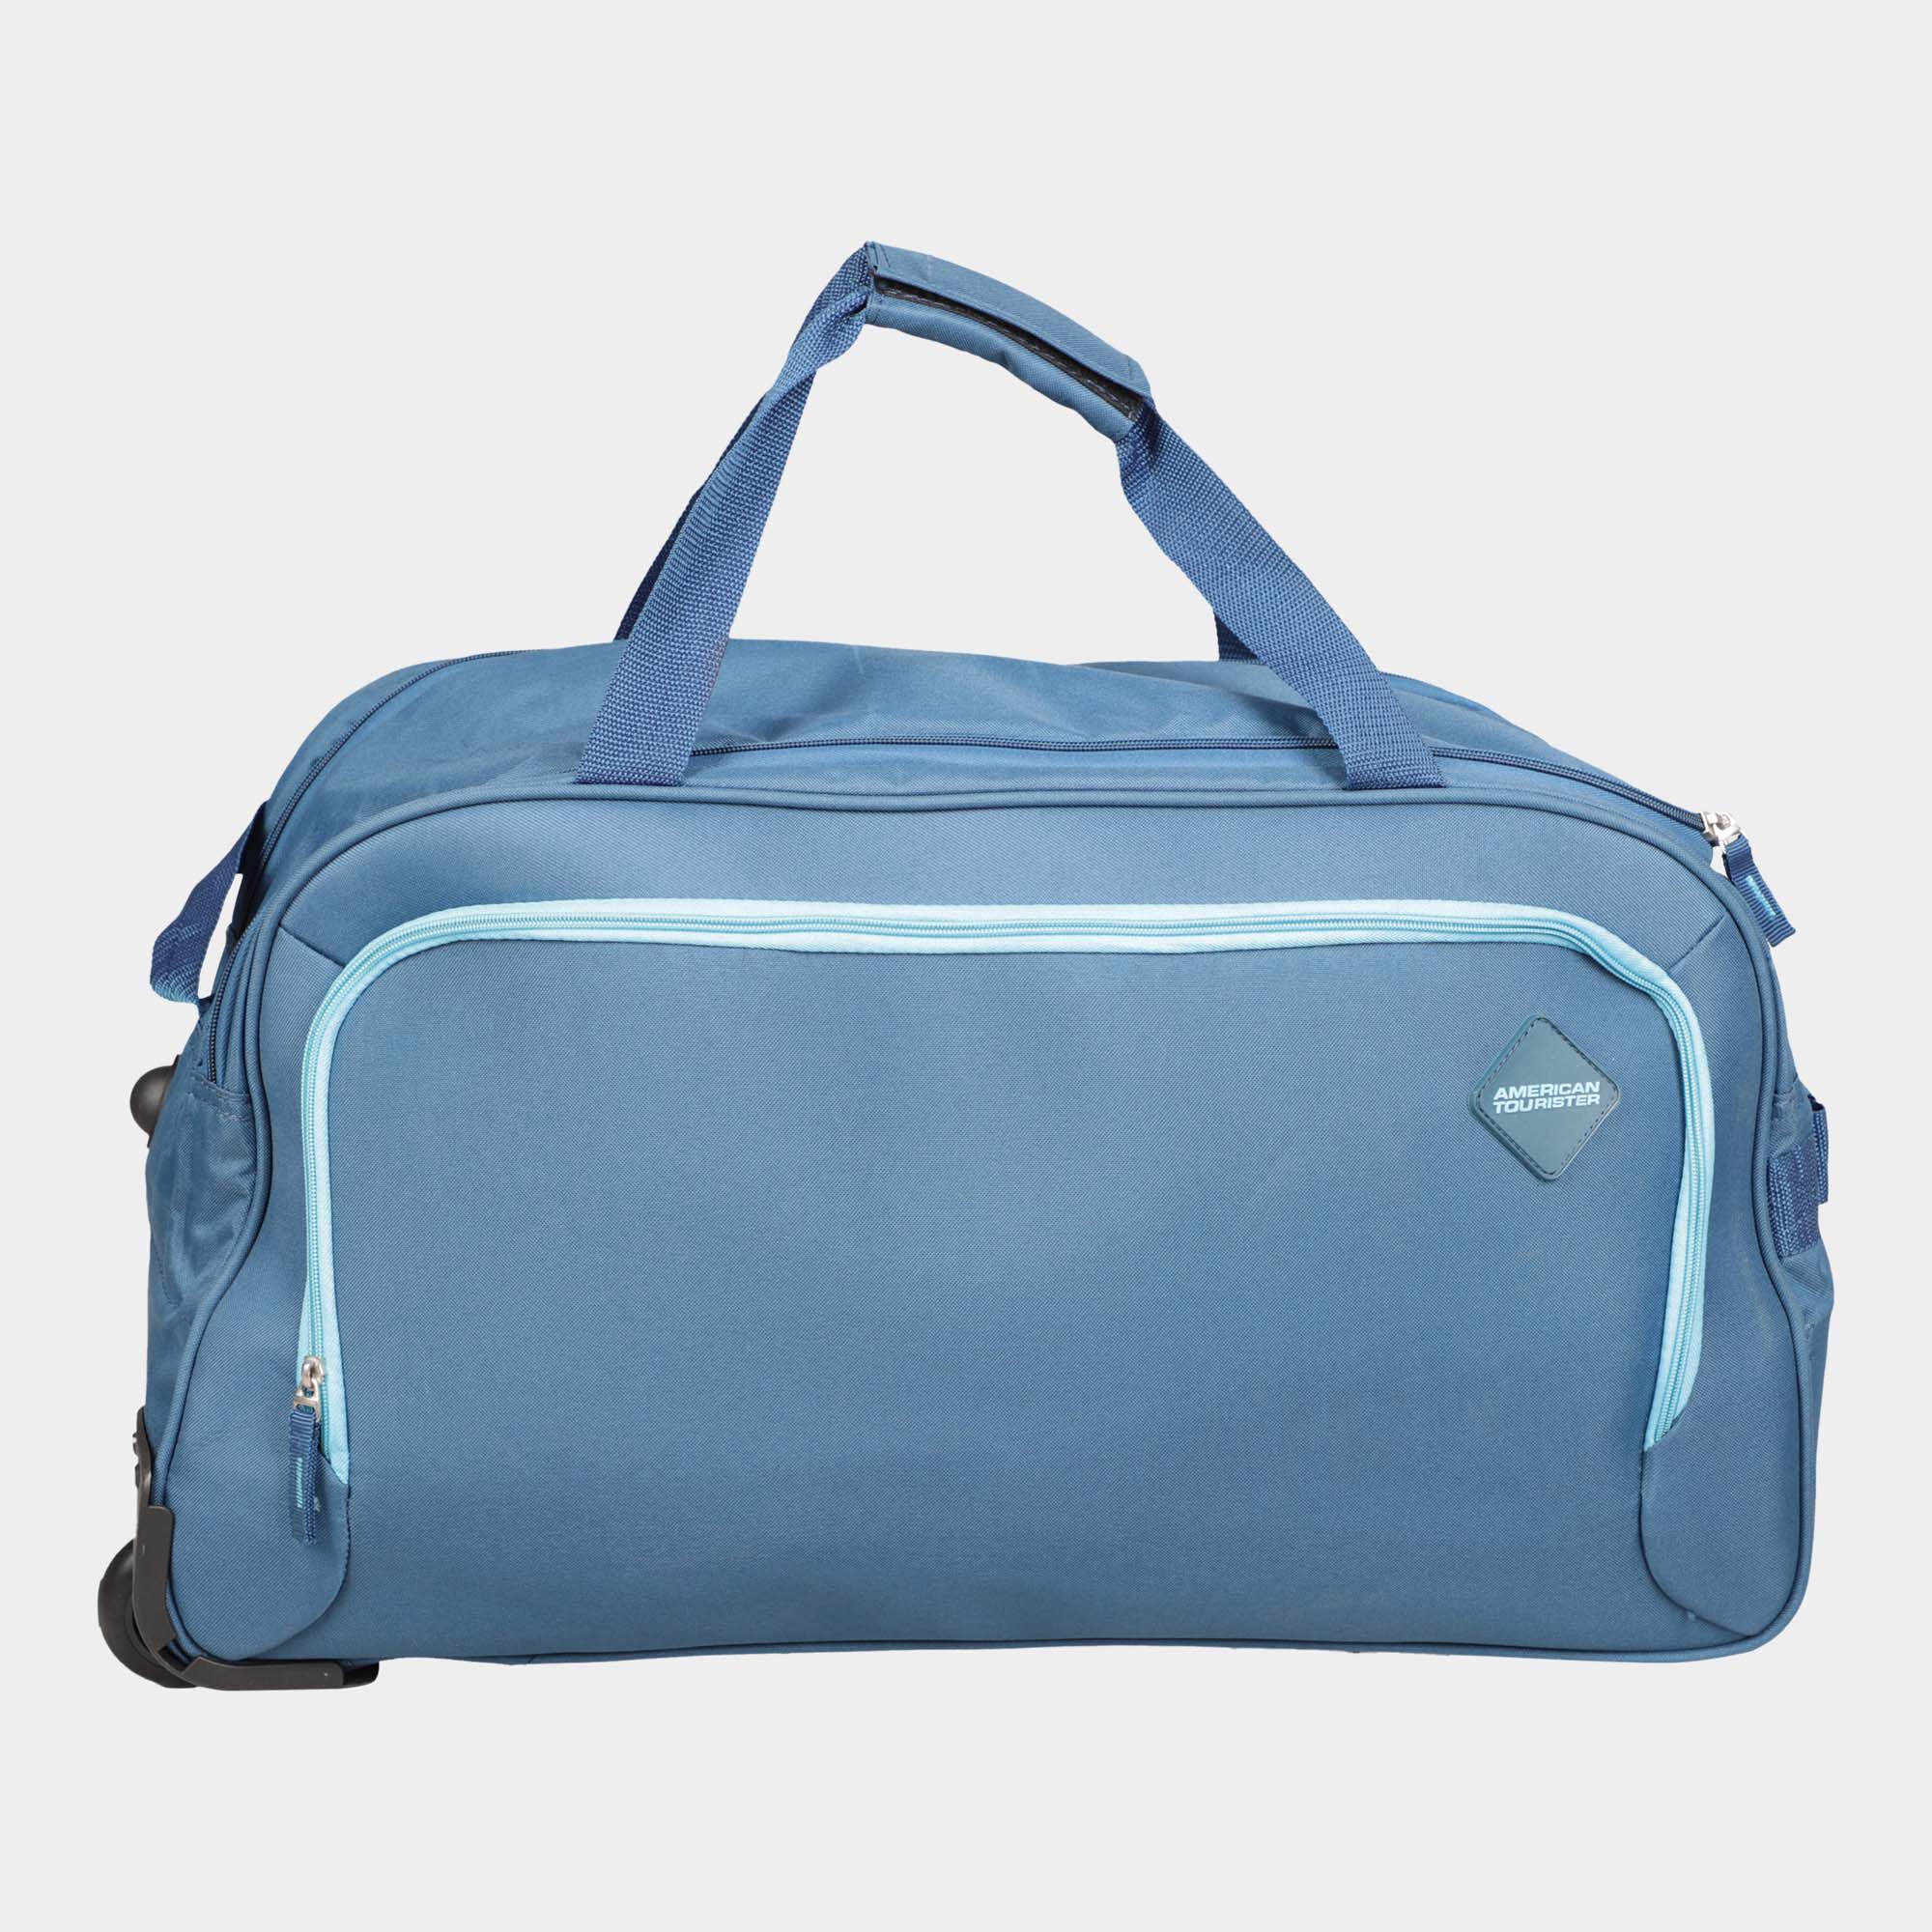 Aristocrat DFTVON55ETBL Polyester Cabin Luggage Trolley Bag (53.5 cm, Blue)  Price - Buy Online at Best Price in India